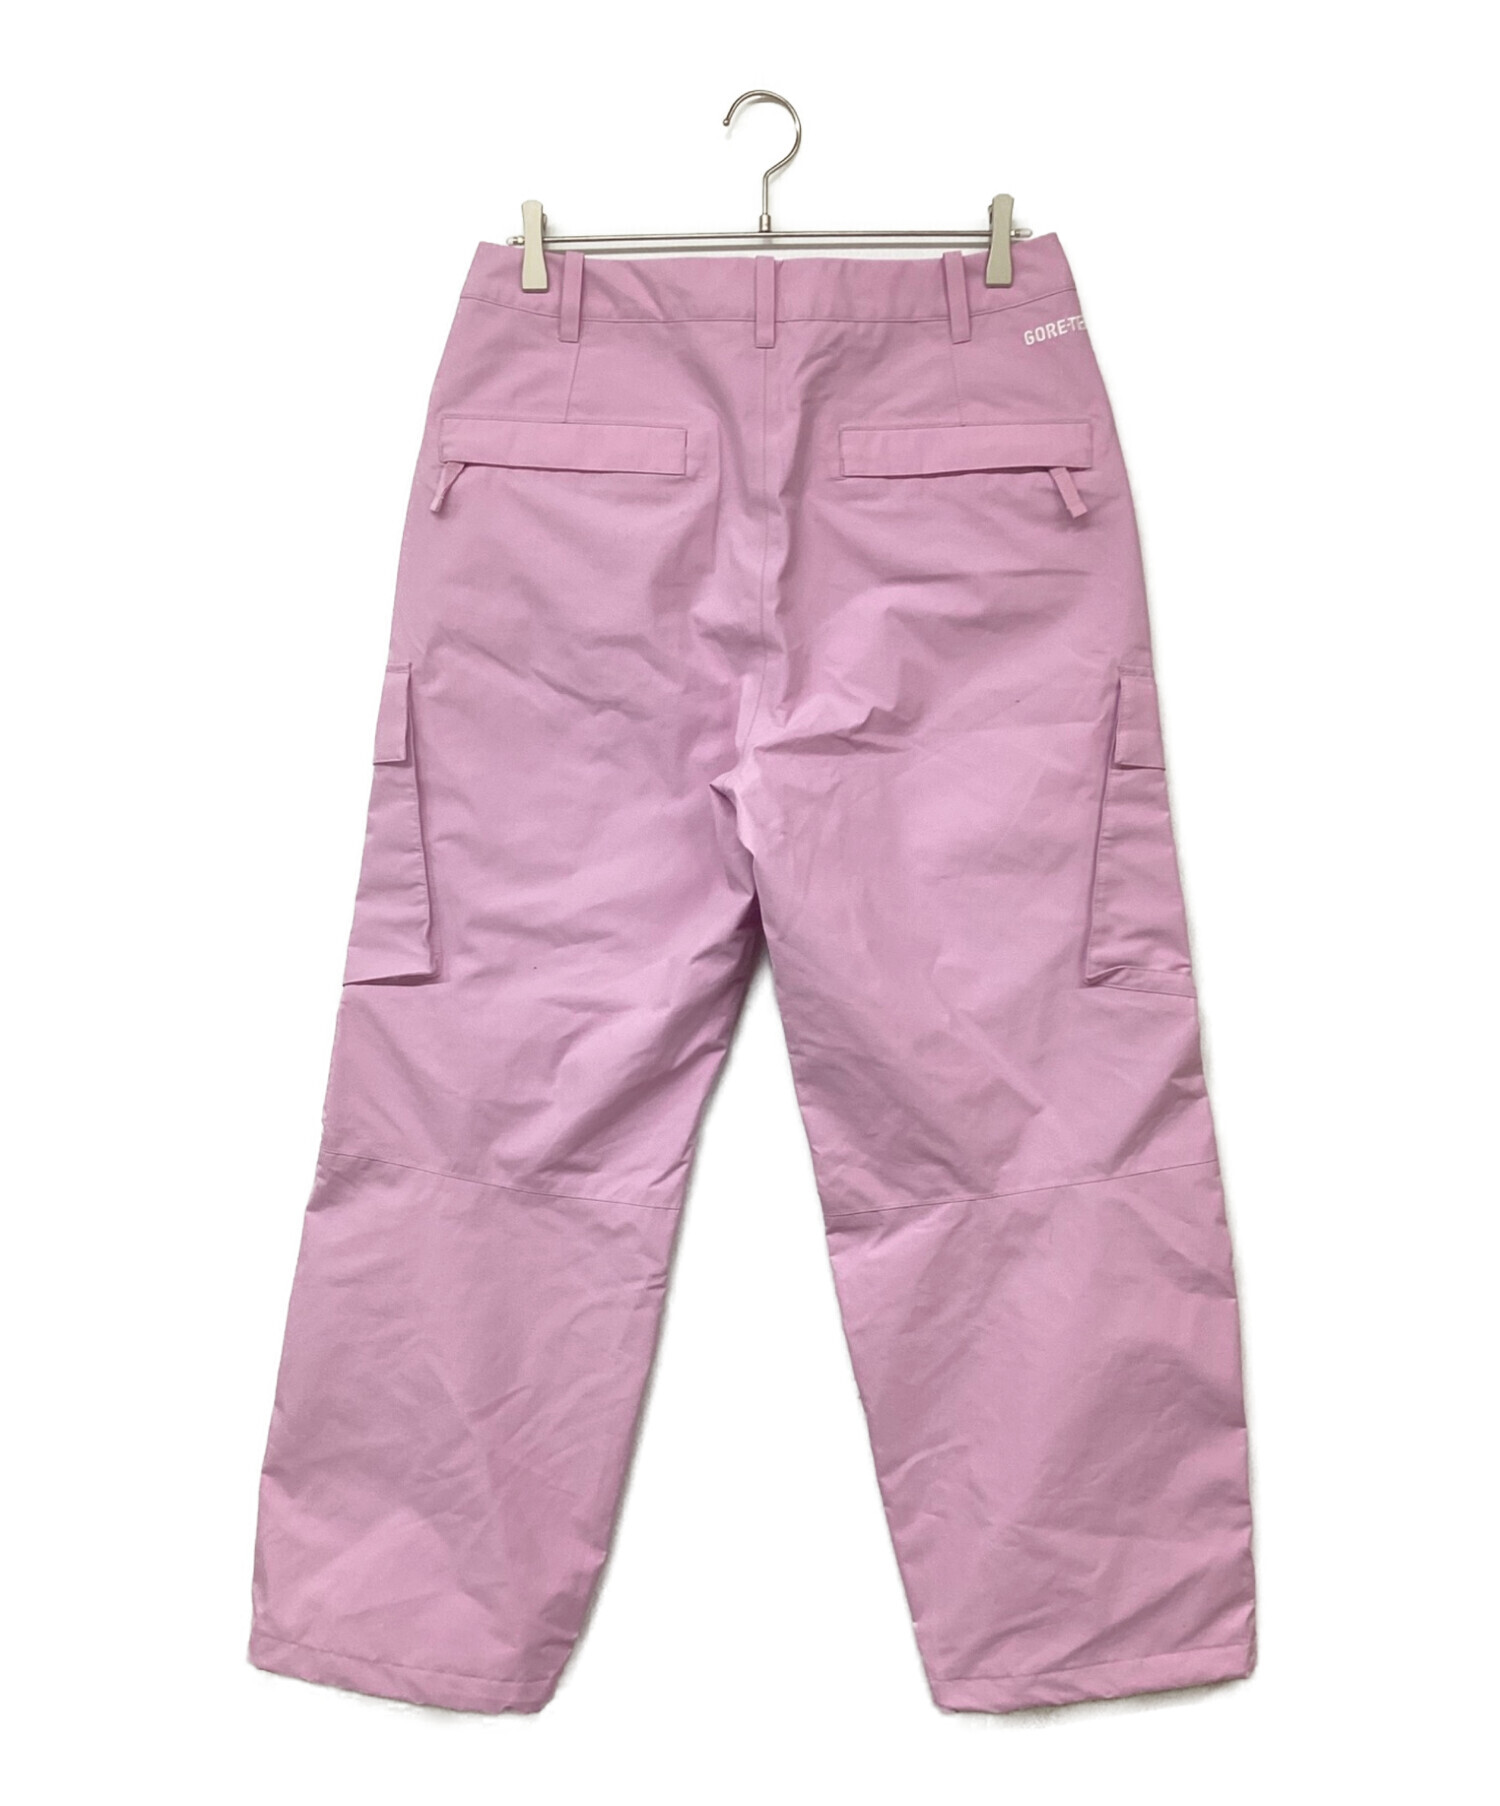 SUPREME (シュプリーム) GORE-TEX CARGO PANT ピンク サイズ:76cm (W30)